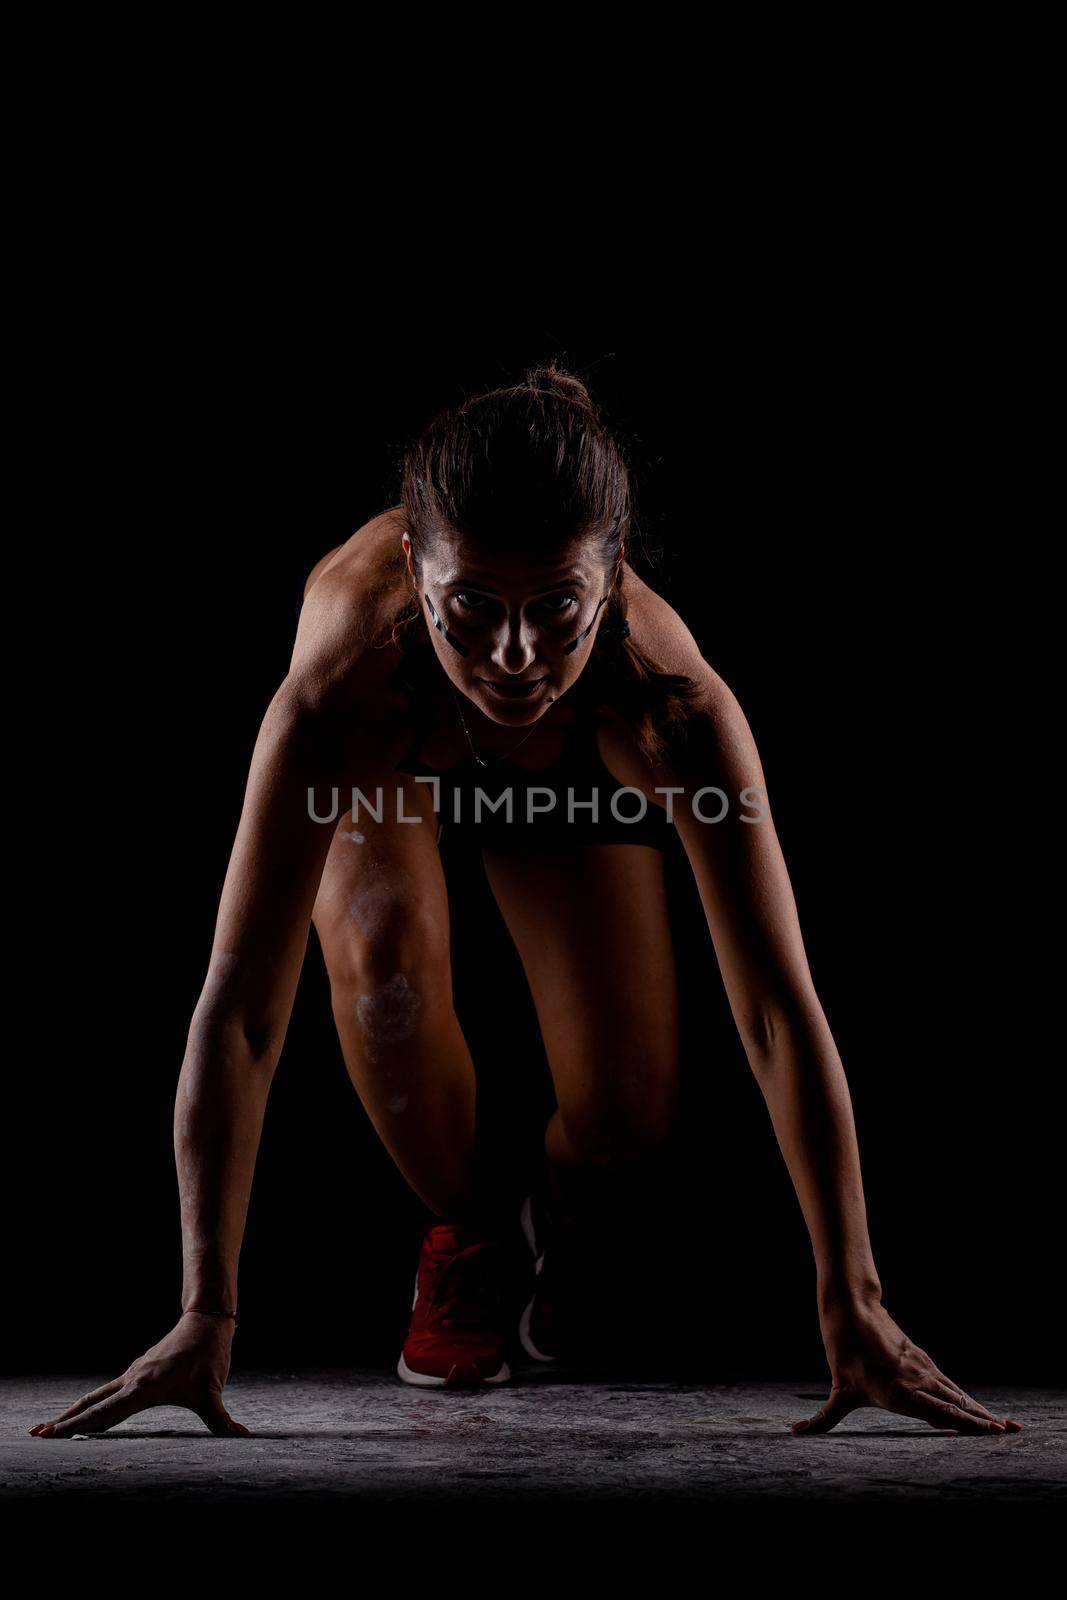 Side lit silhouette fit girl in race start position against dark background.. by kokimk